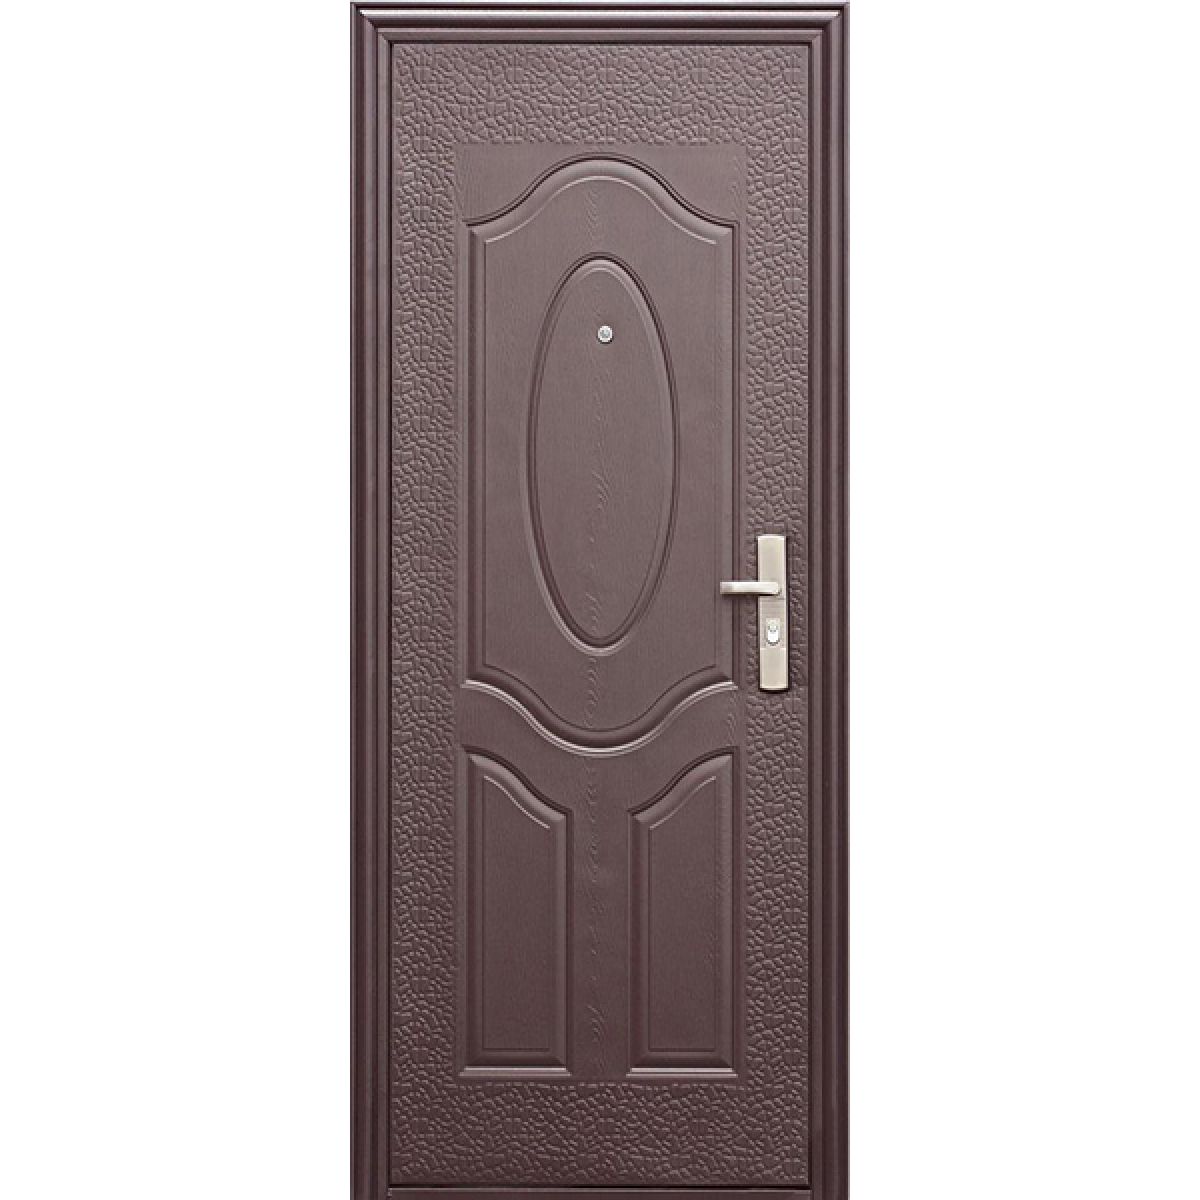 Железная межкомнатная дверь. Дверь мет.е40м(960)l(бронза). Дверь мет. E40m (860l) ФВ. Дверь металлическая е40m(860l). Дверь мет. Е40м(960r) ФВ.